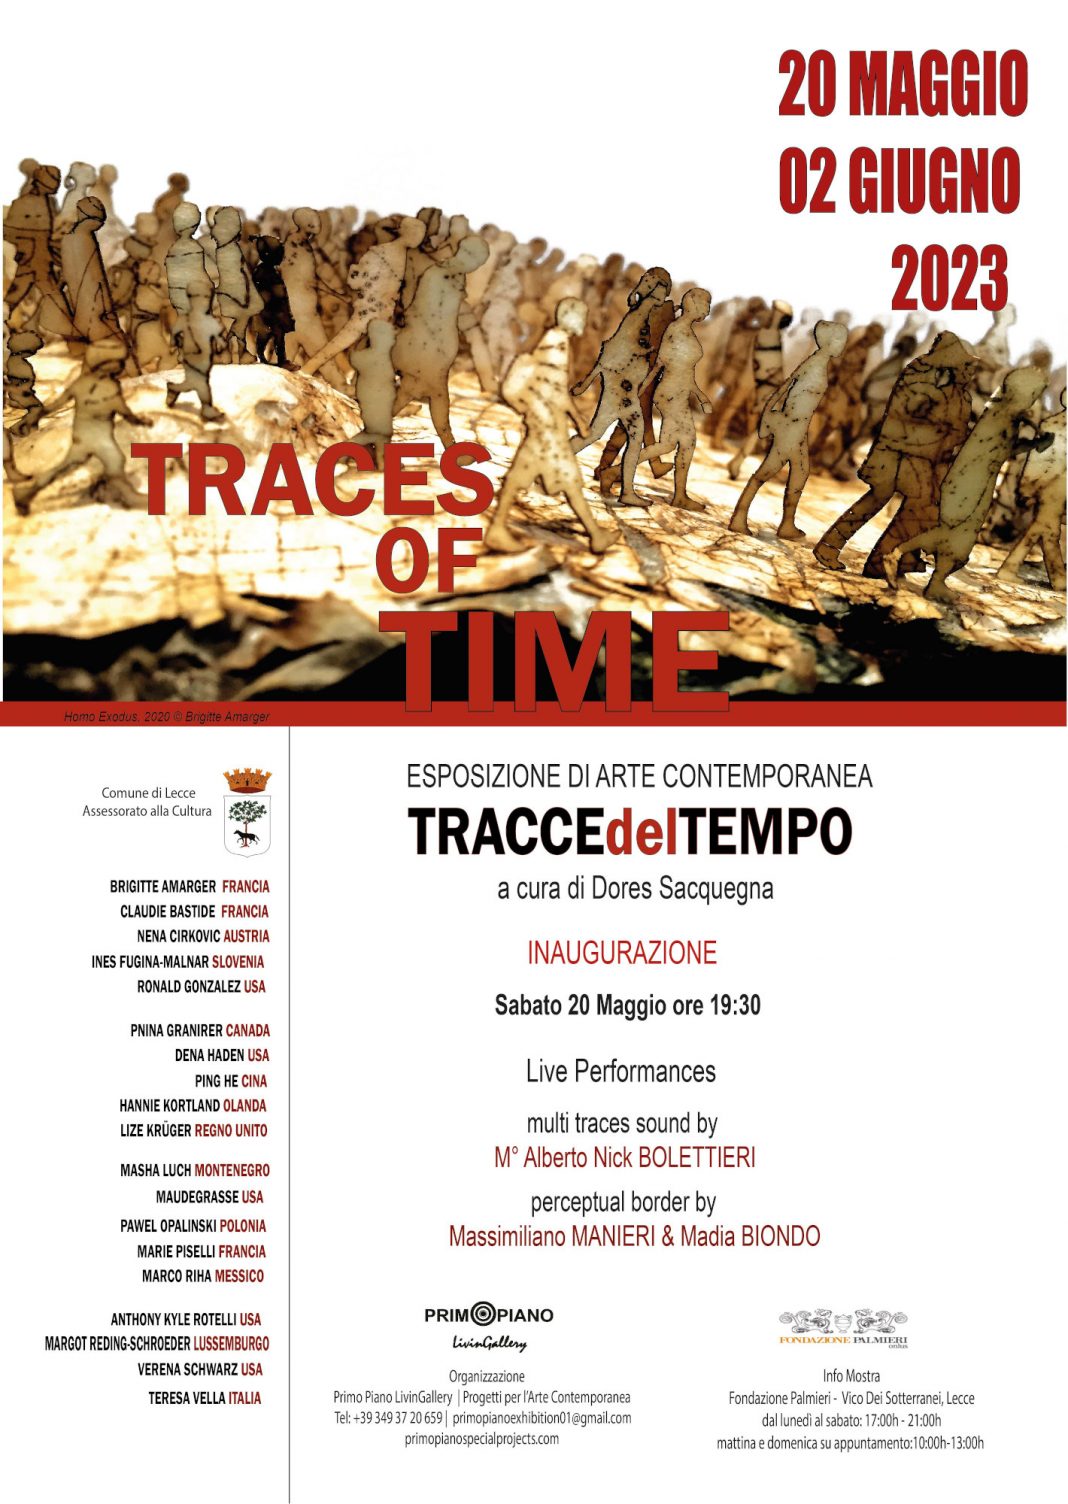 Tracce del Tempohttps://www.exibart.com/repository/media/formidable/11/img/3c2/locandina-1068x1504.jpg